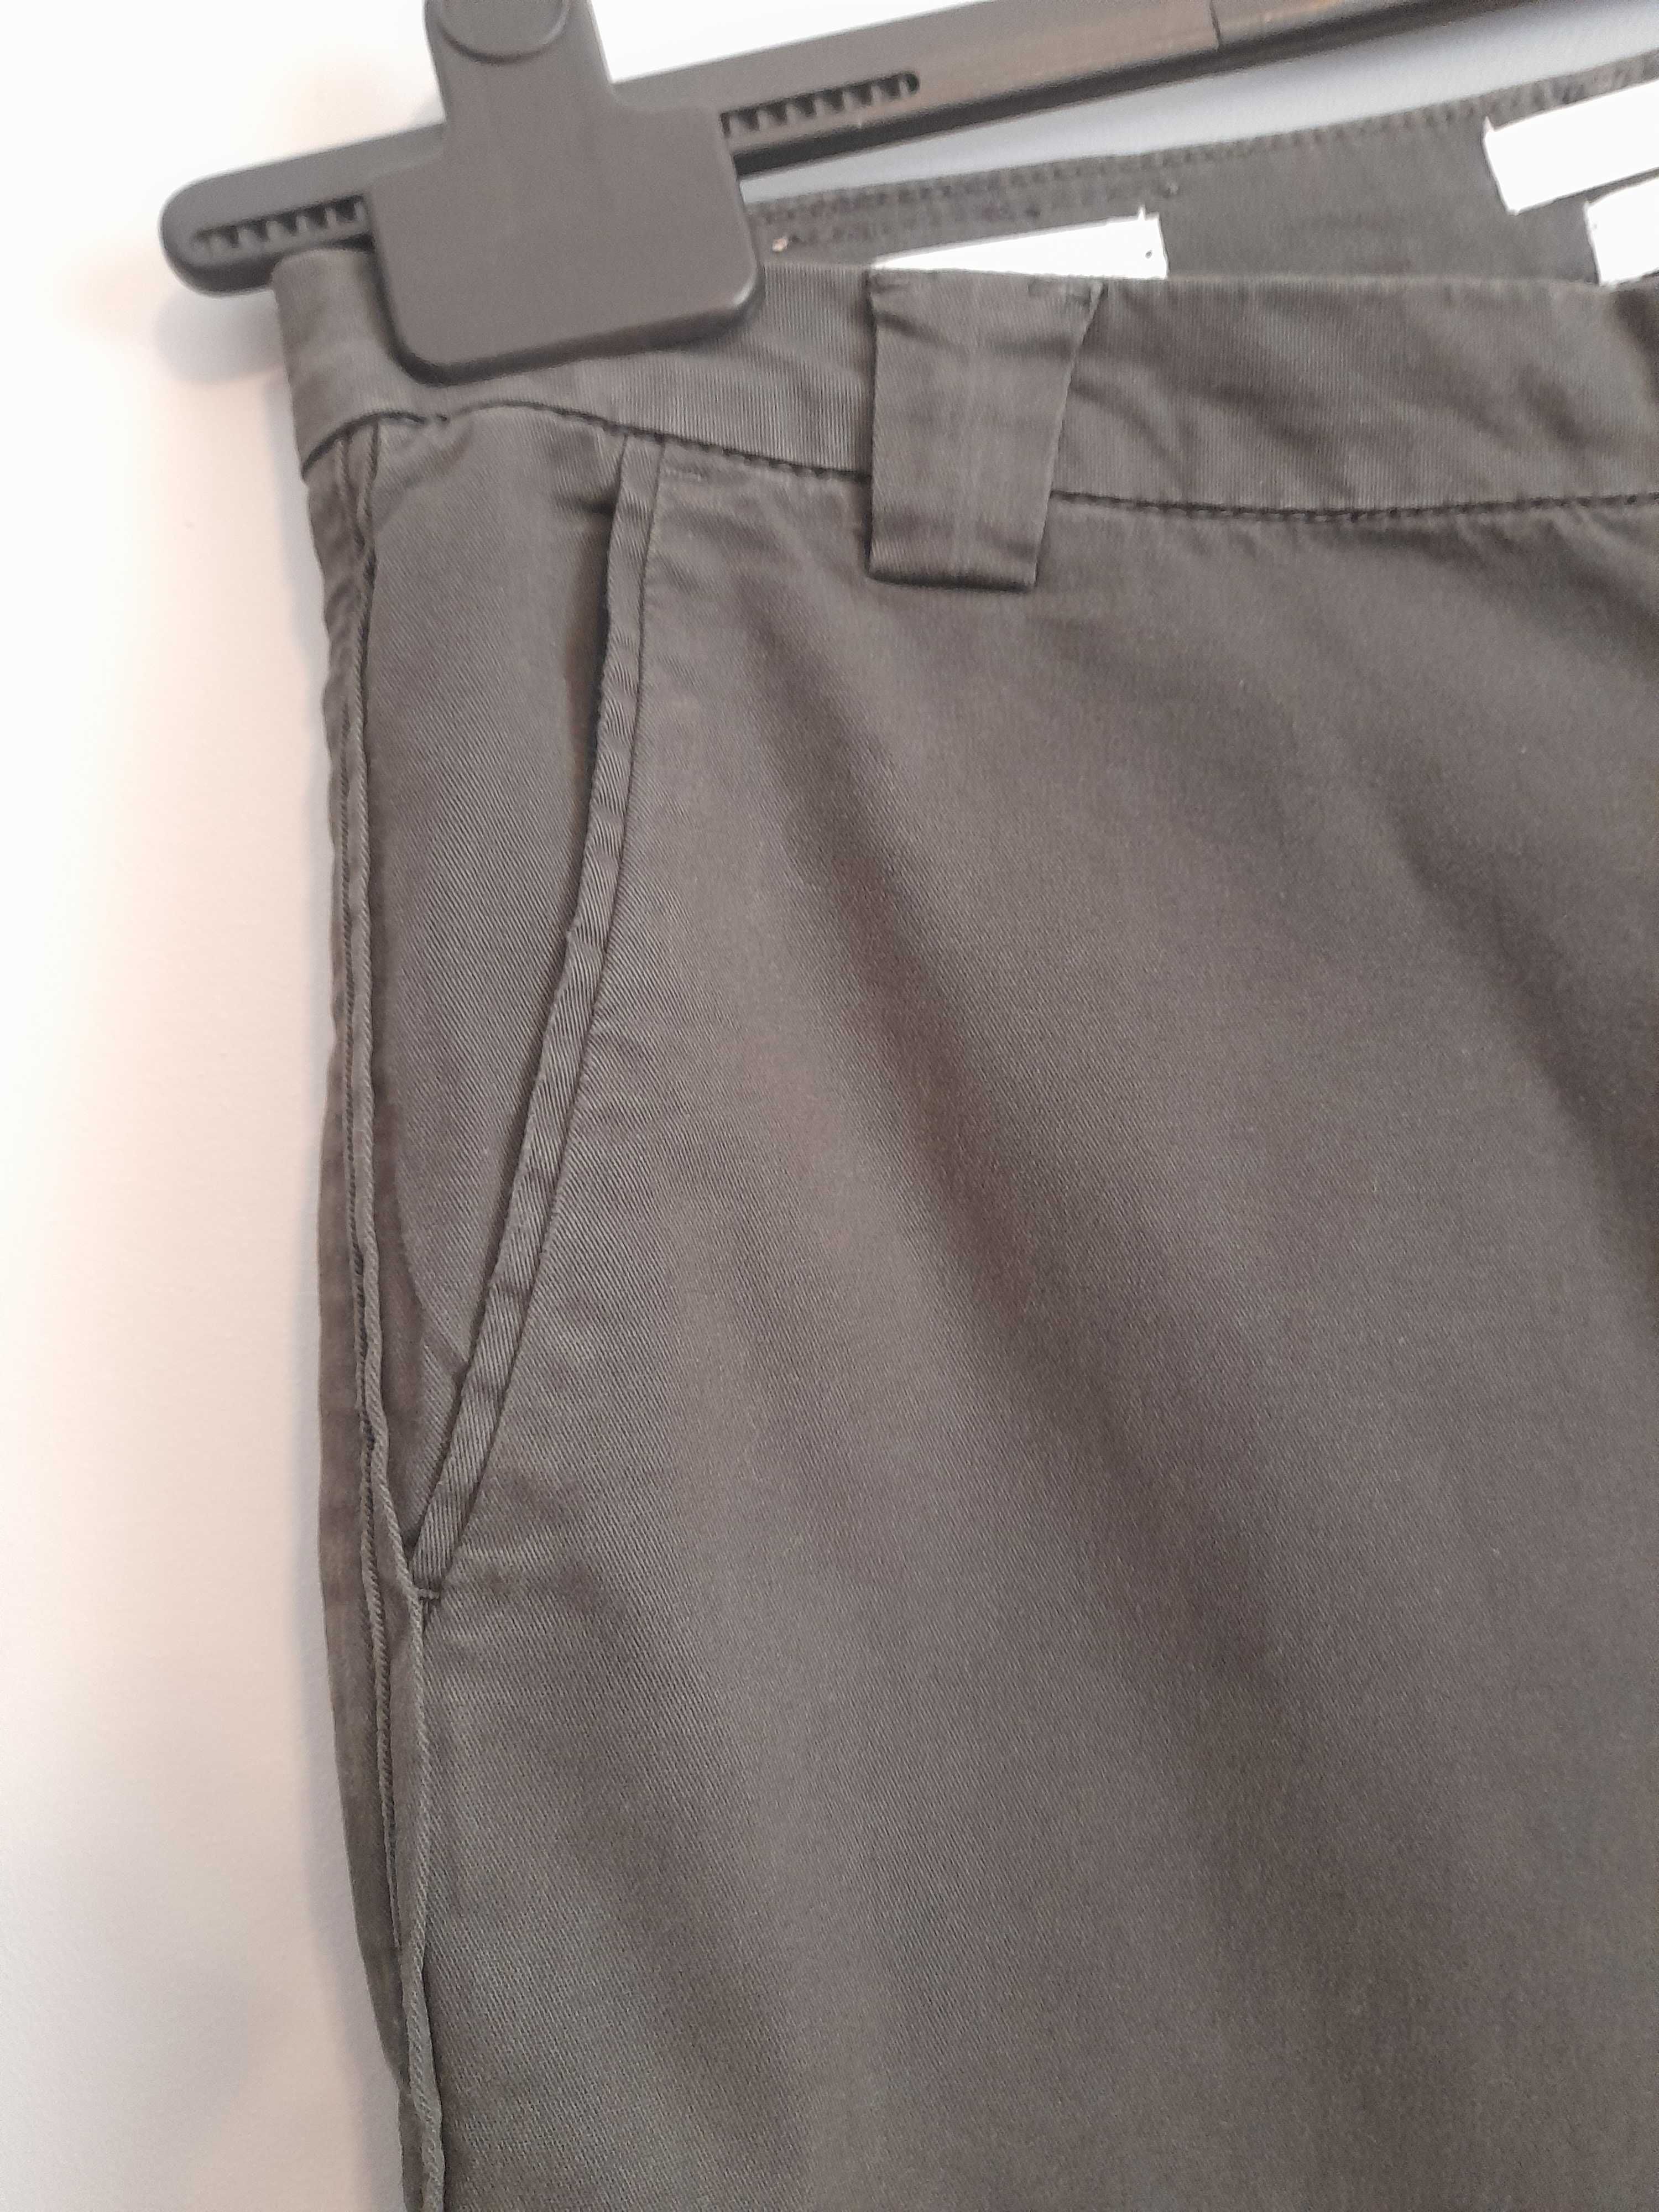 Spodnie typu jeans firmy REIKO r. 38